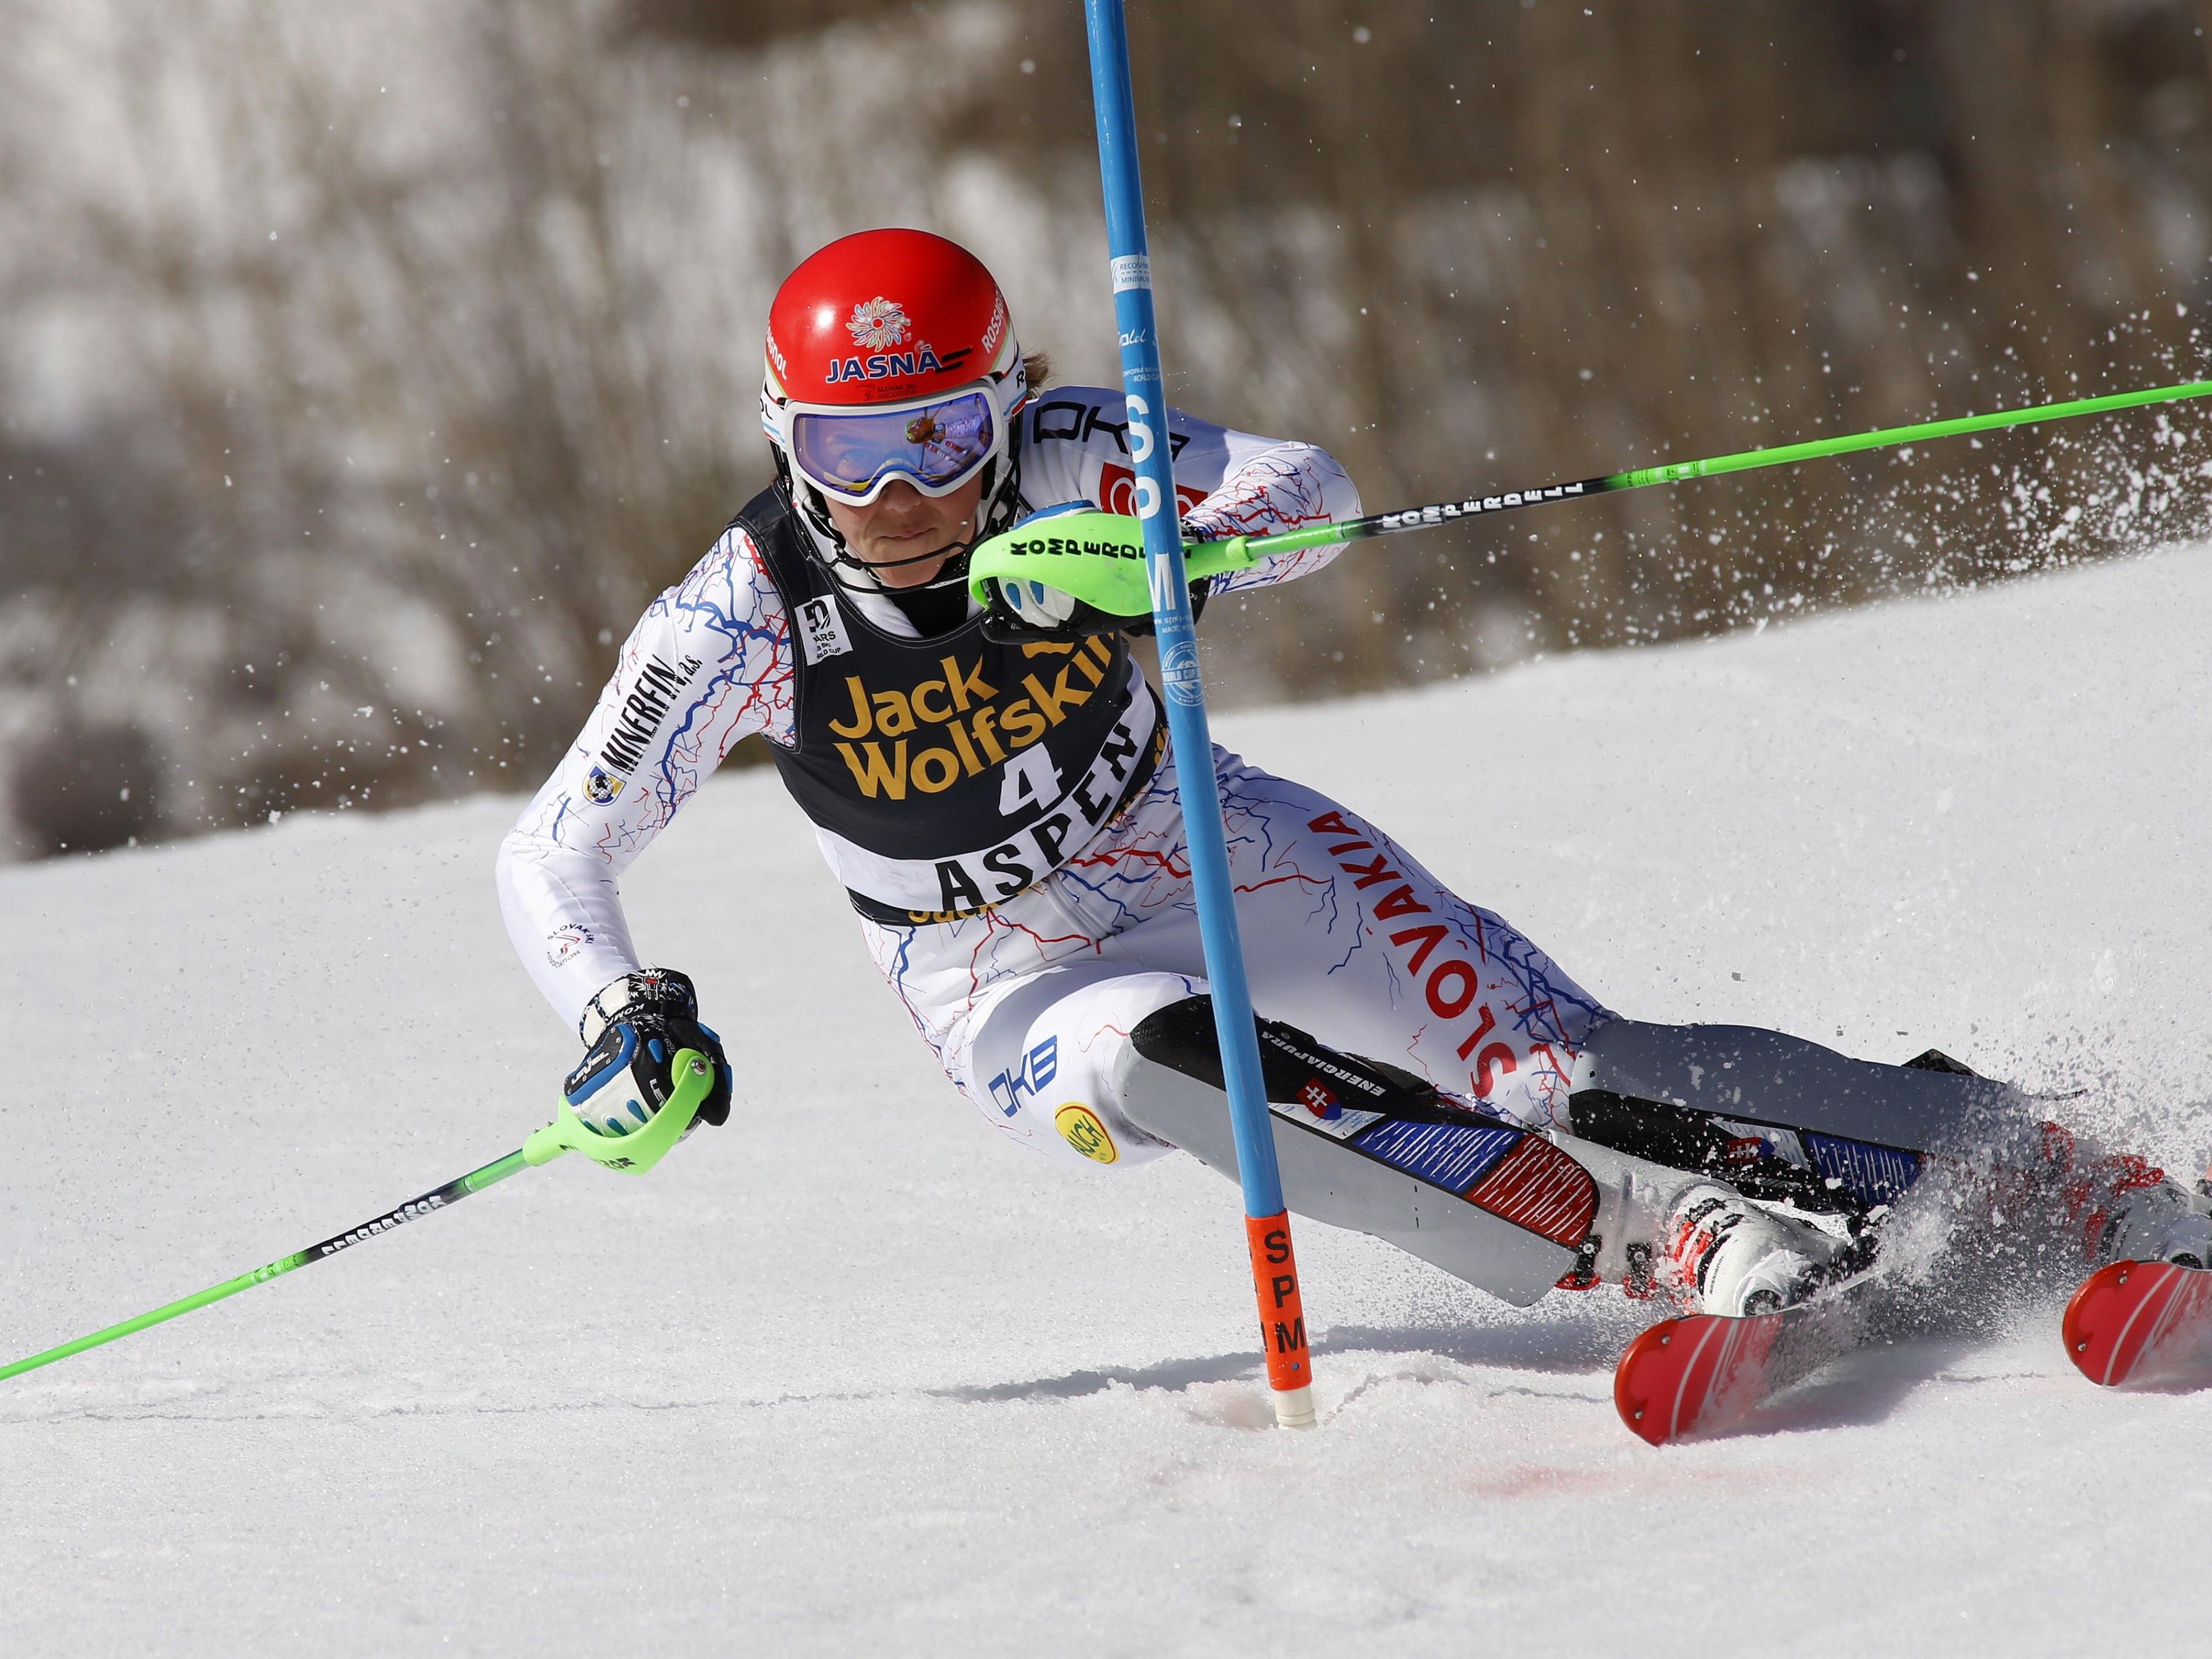 Die Slowakin Petra Vlhova gewinnt den letzten Slalom der Saison in Aspen. Bernadette Schild landet auf Rang neun.